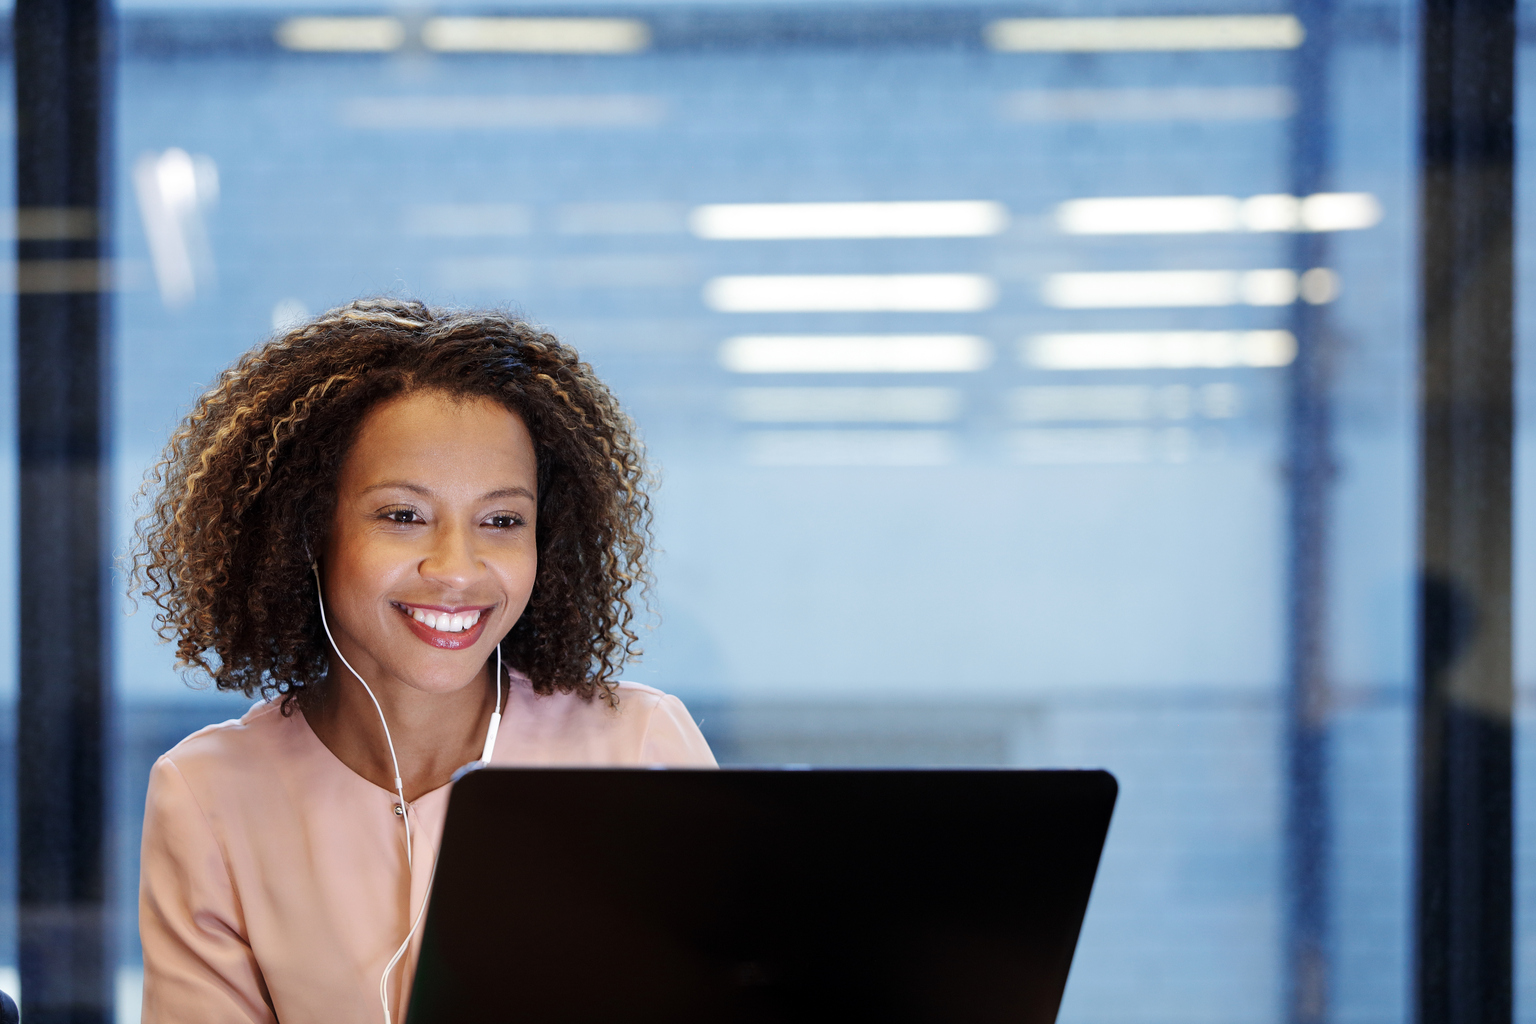 Young smiling businesswoman wearing earphones, using laptop